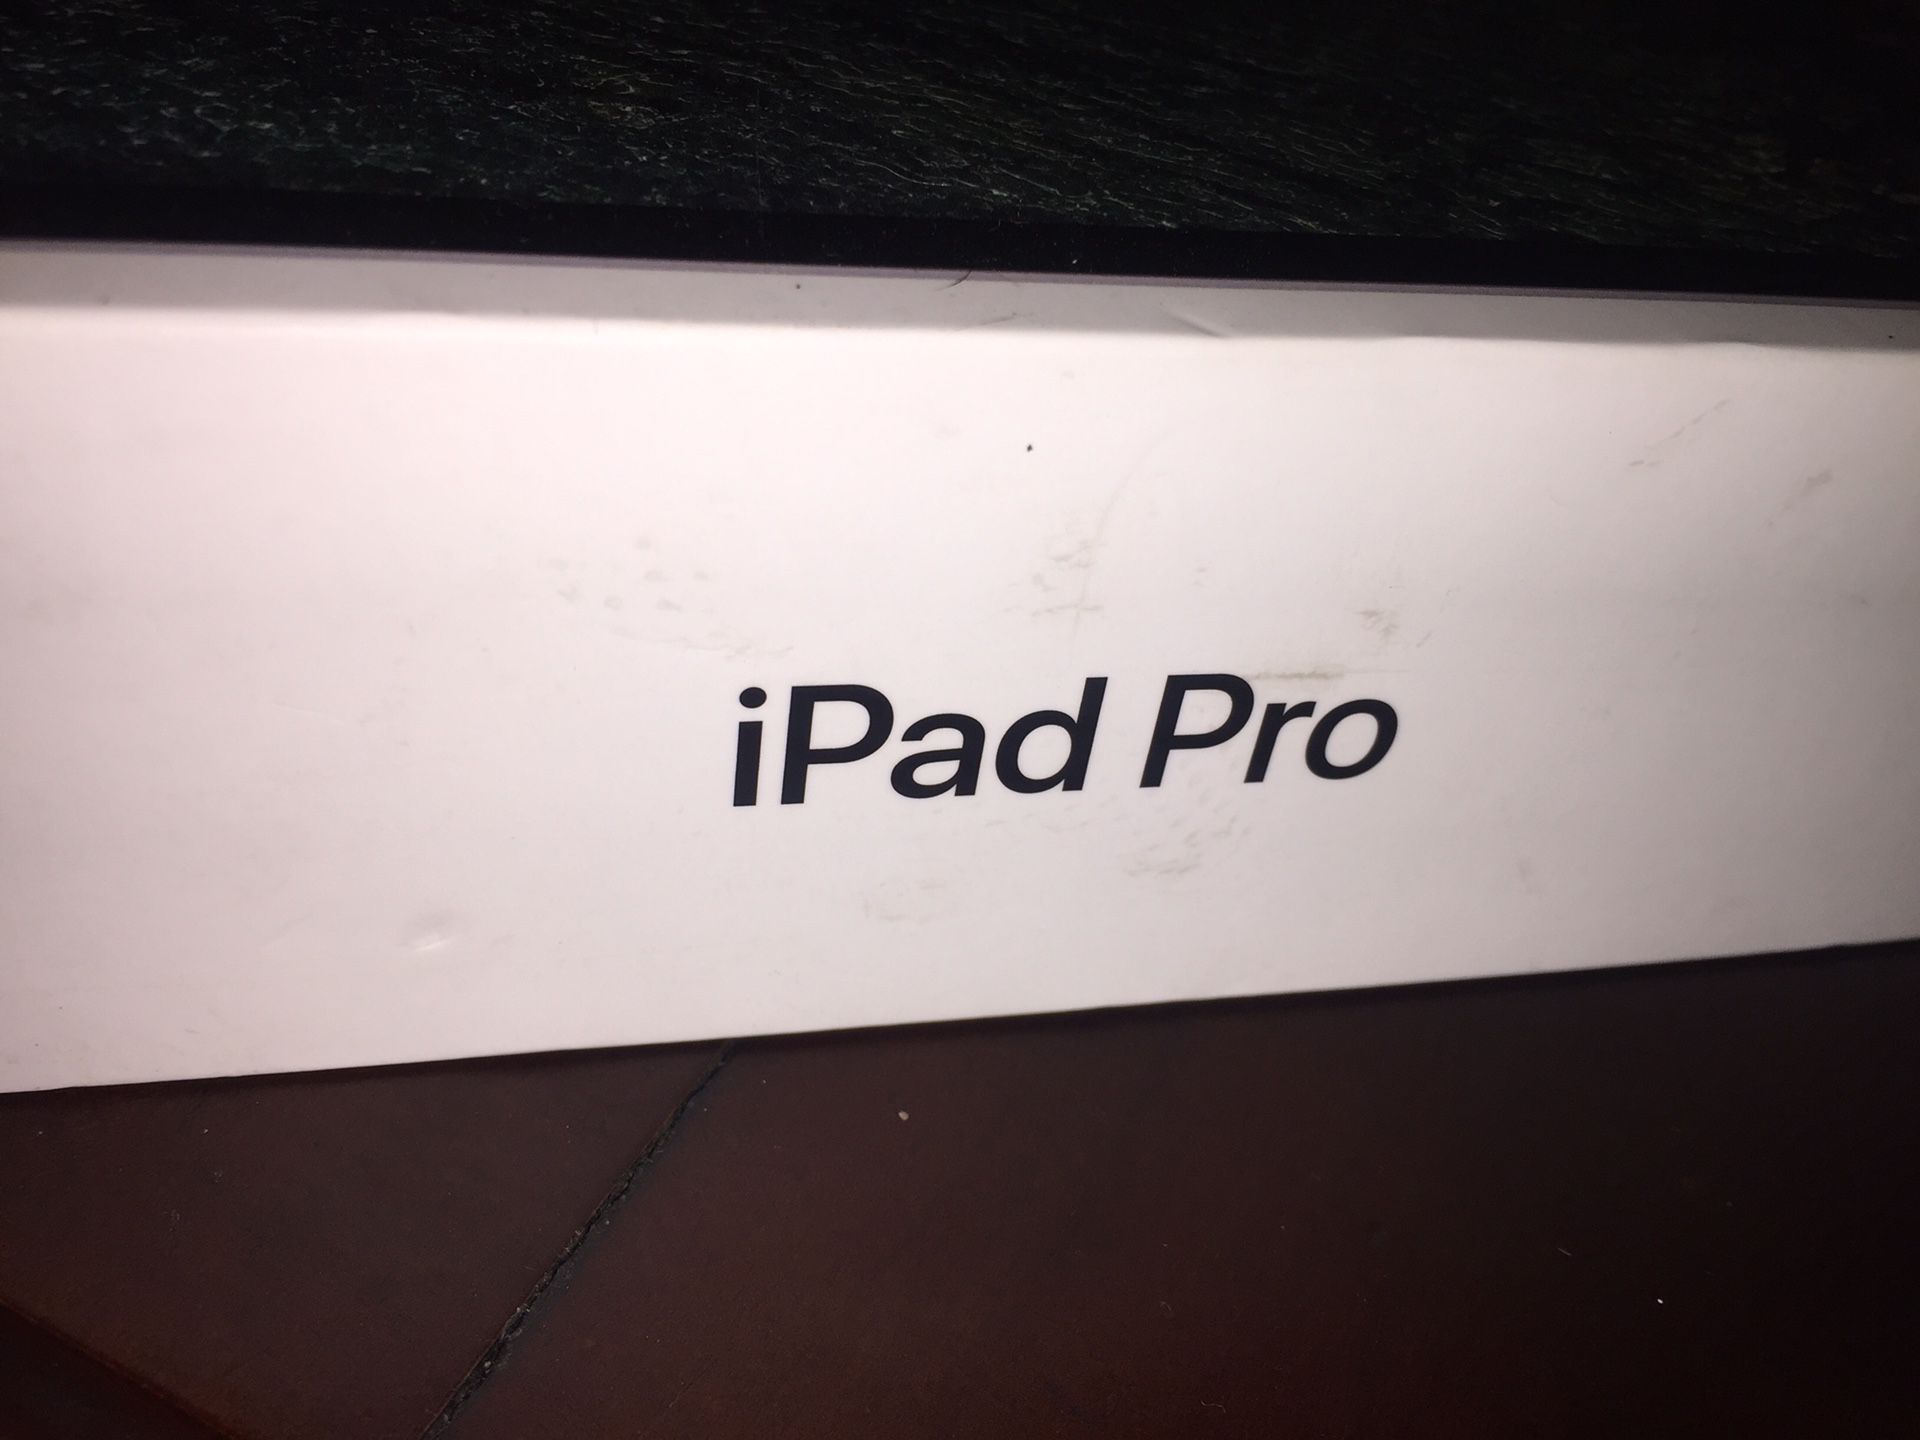 iPad Pro 64 gb 10.5 inch!!! With box brand new